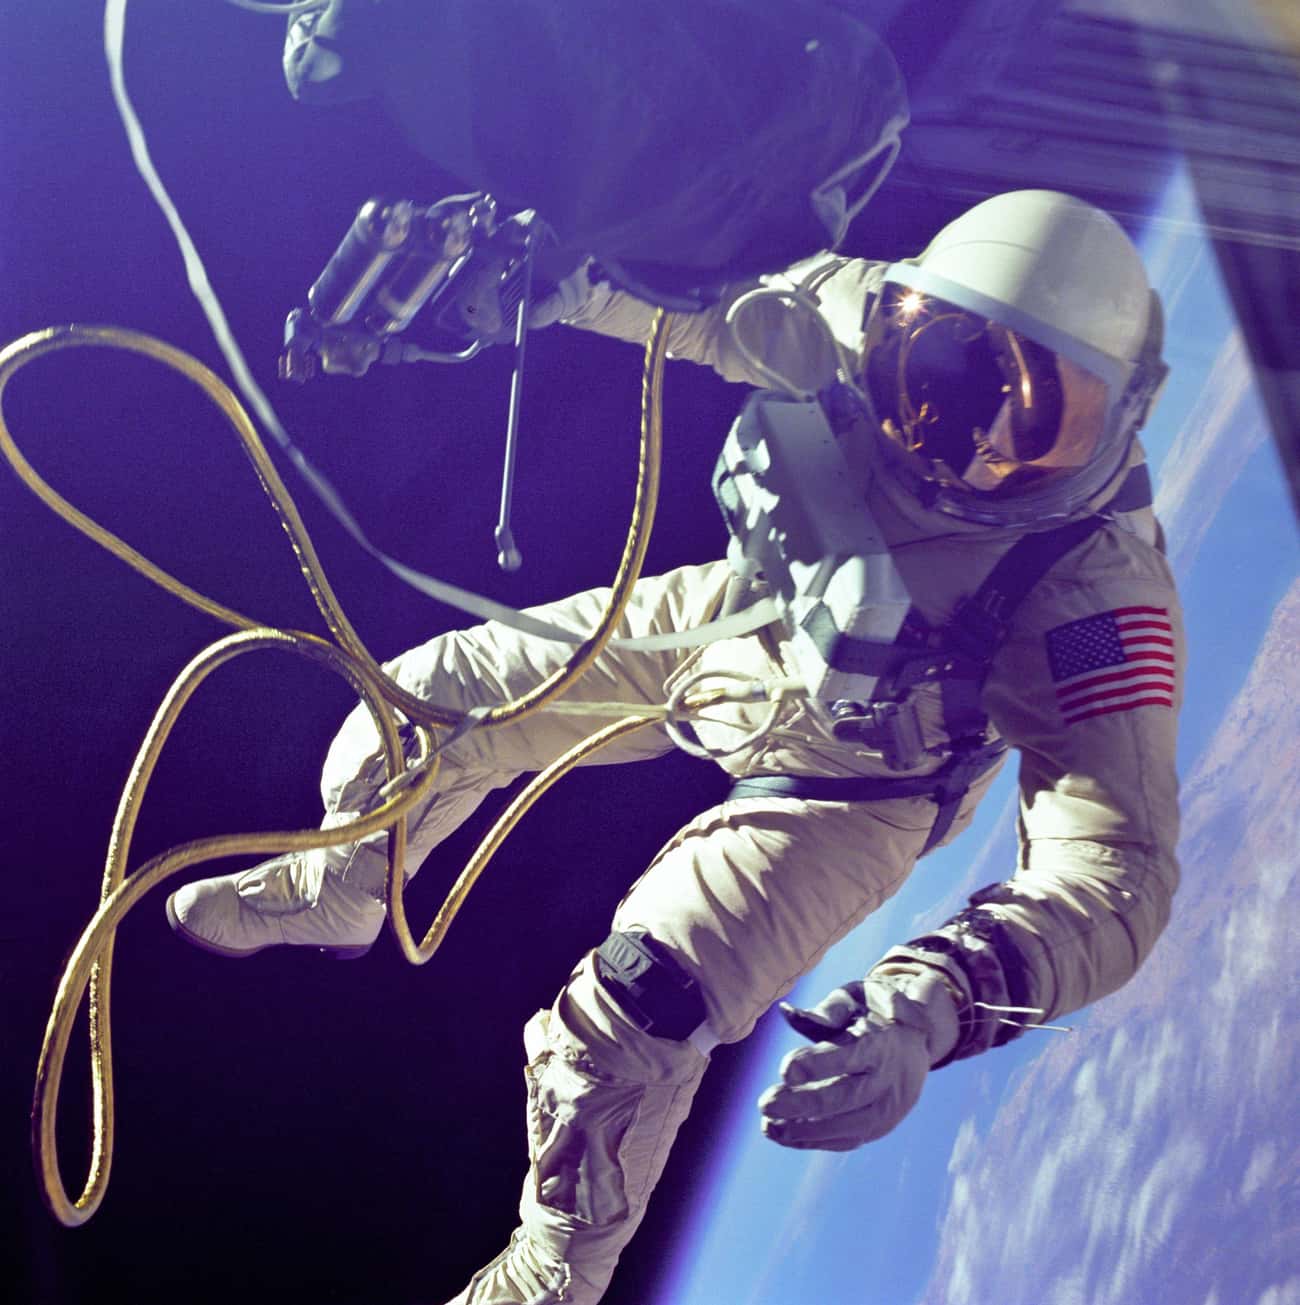 The First American Spacewalk; 1965